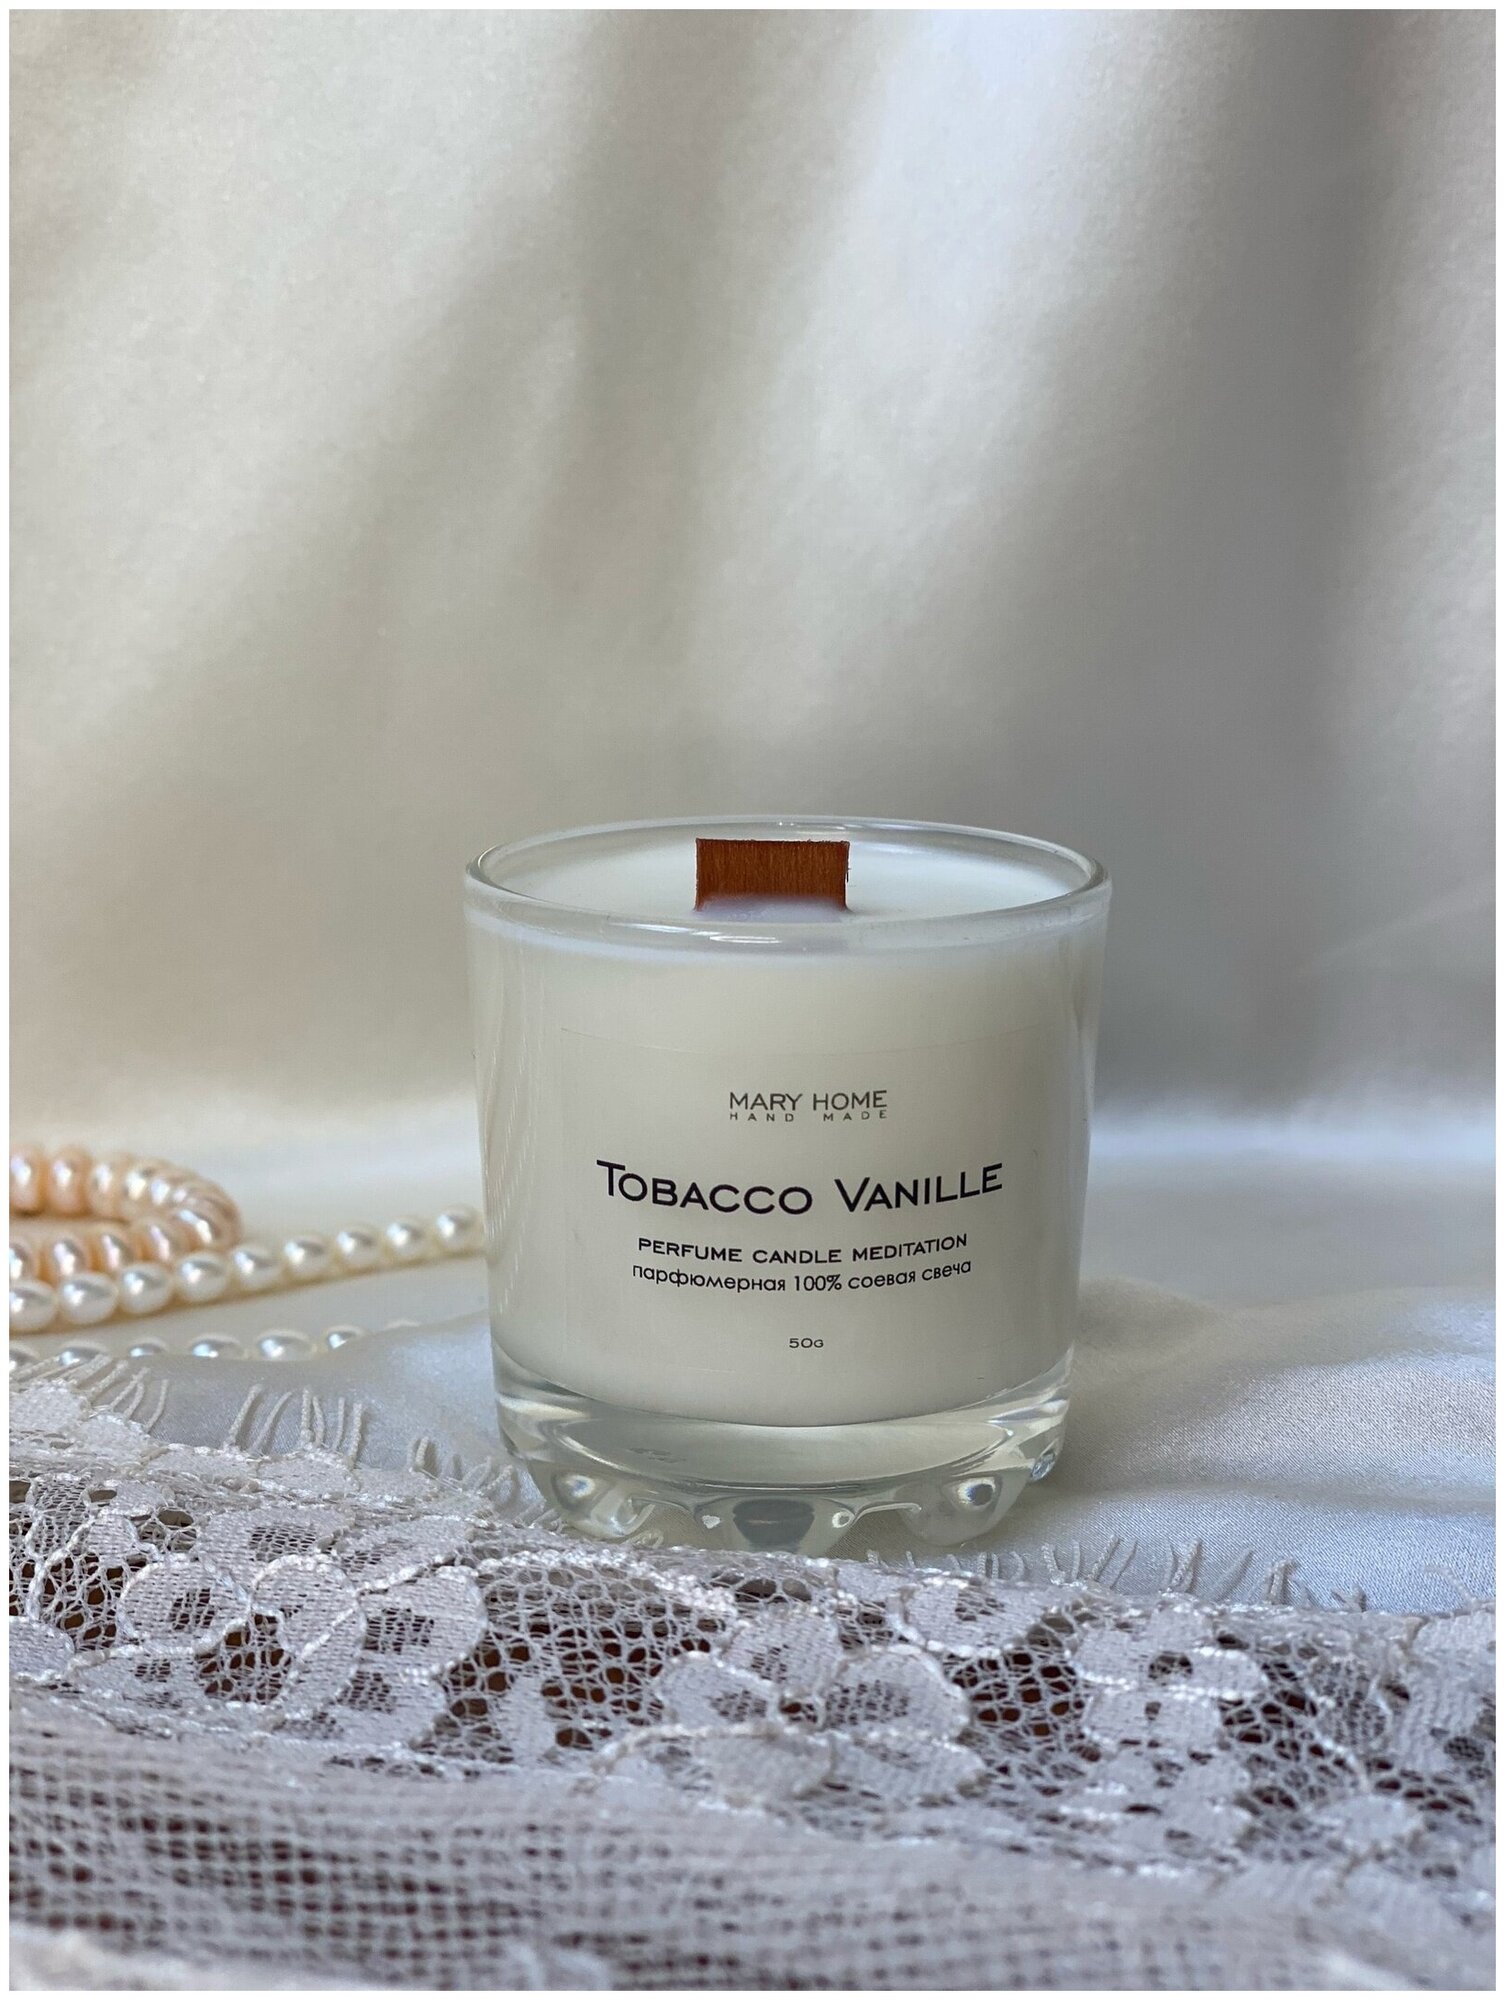 Парфюмерная свеча "Tobacco Vanille" Perfume Candle Meditation, 2 шт